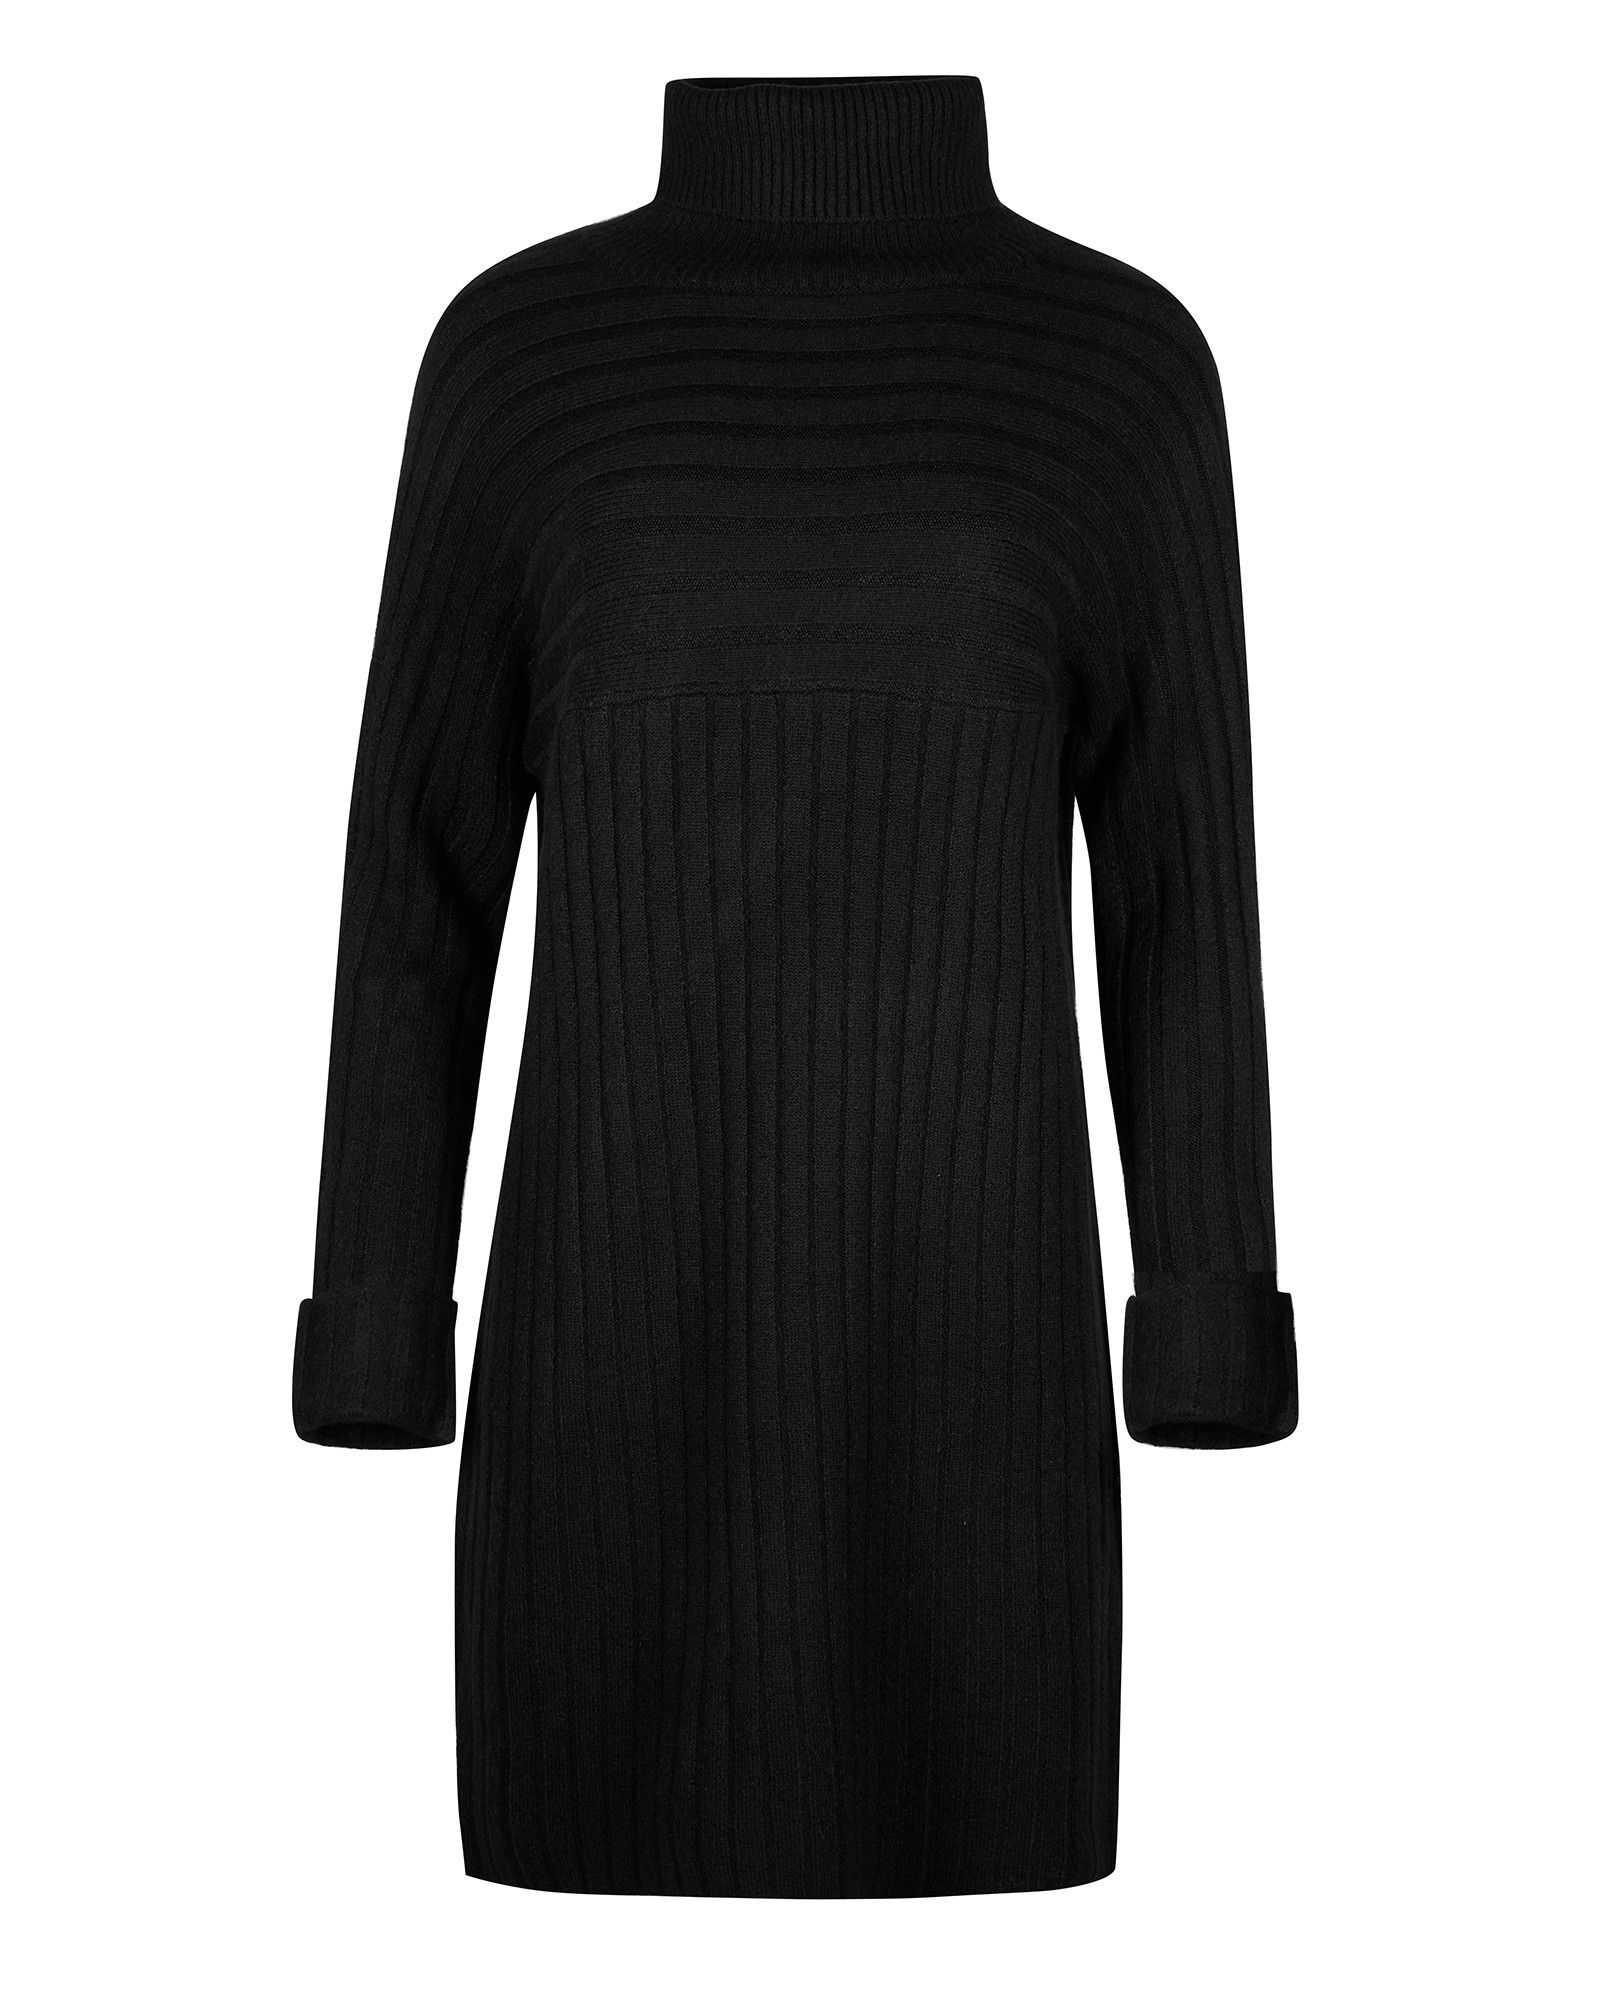 Buy > knitted black jumper dress > in stock